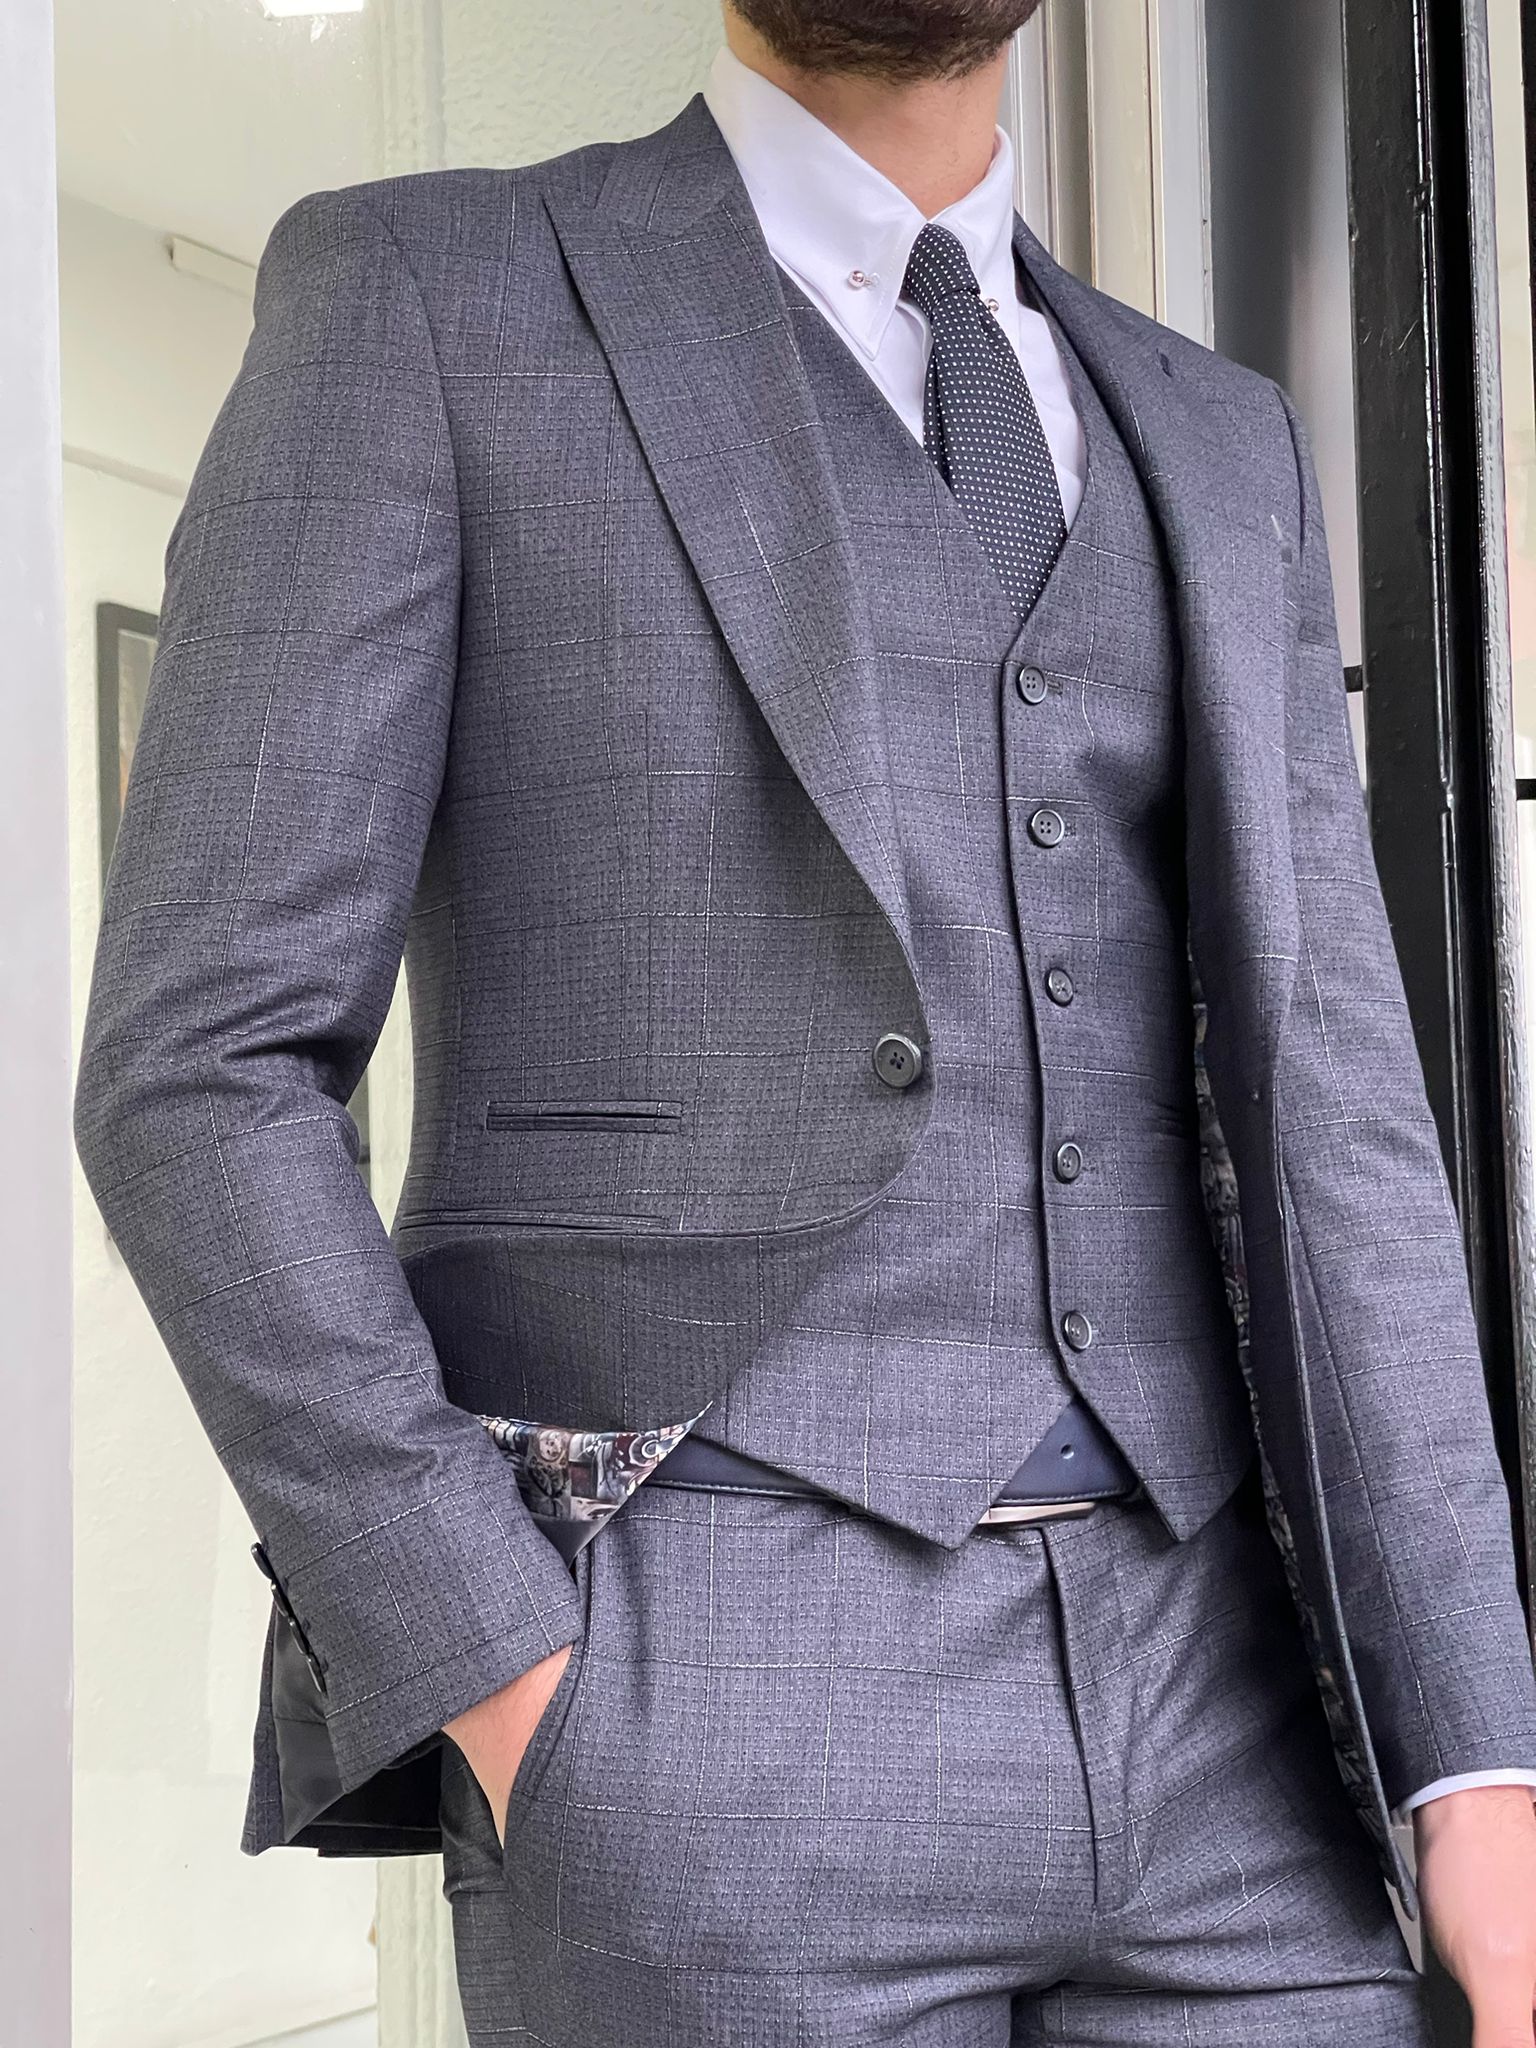 Brook Taverner Dawlish Suit